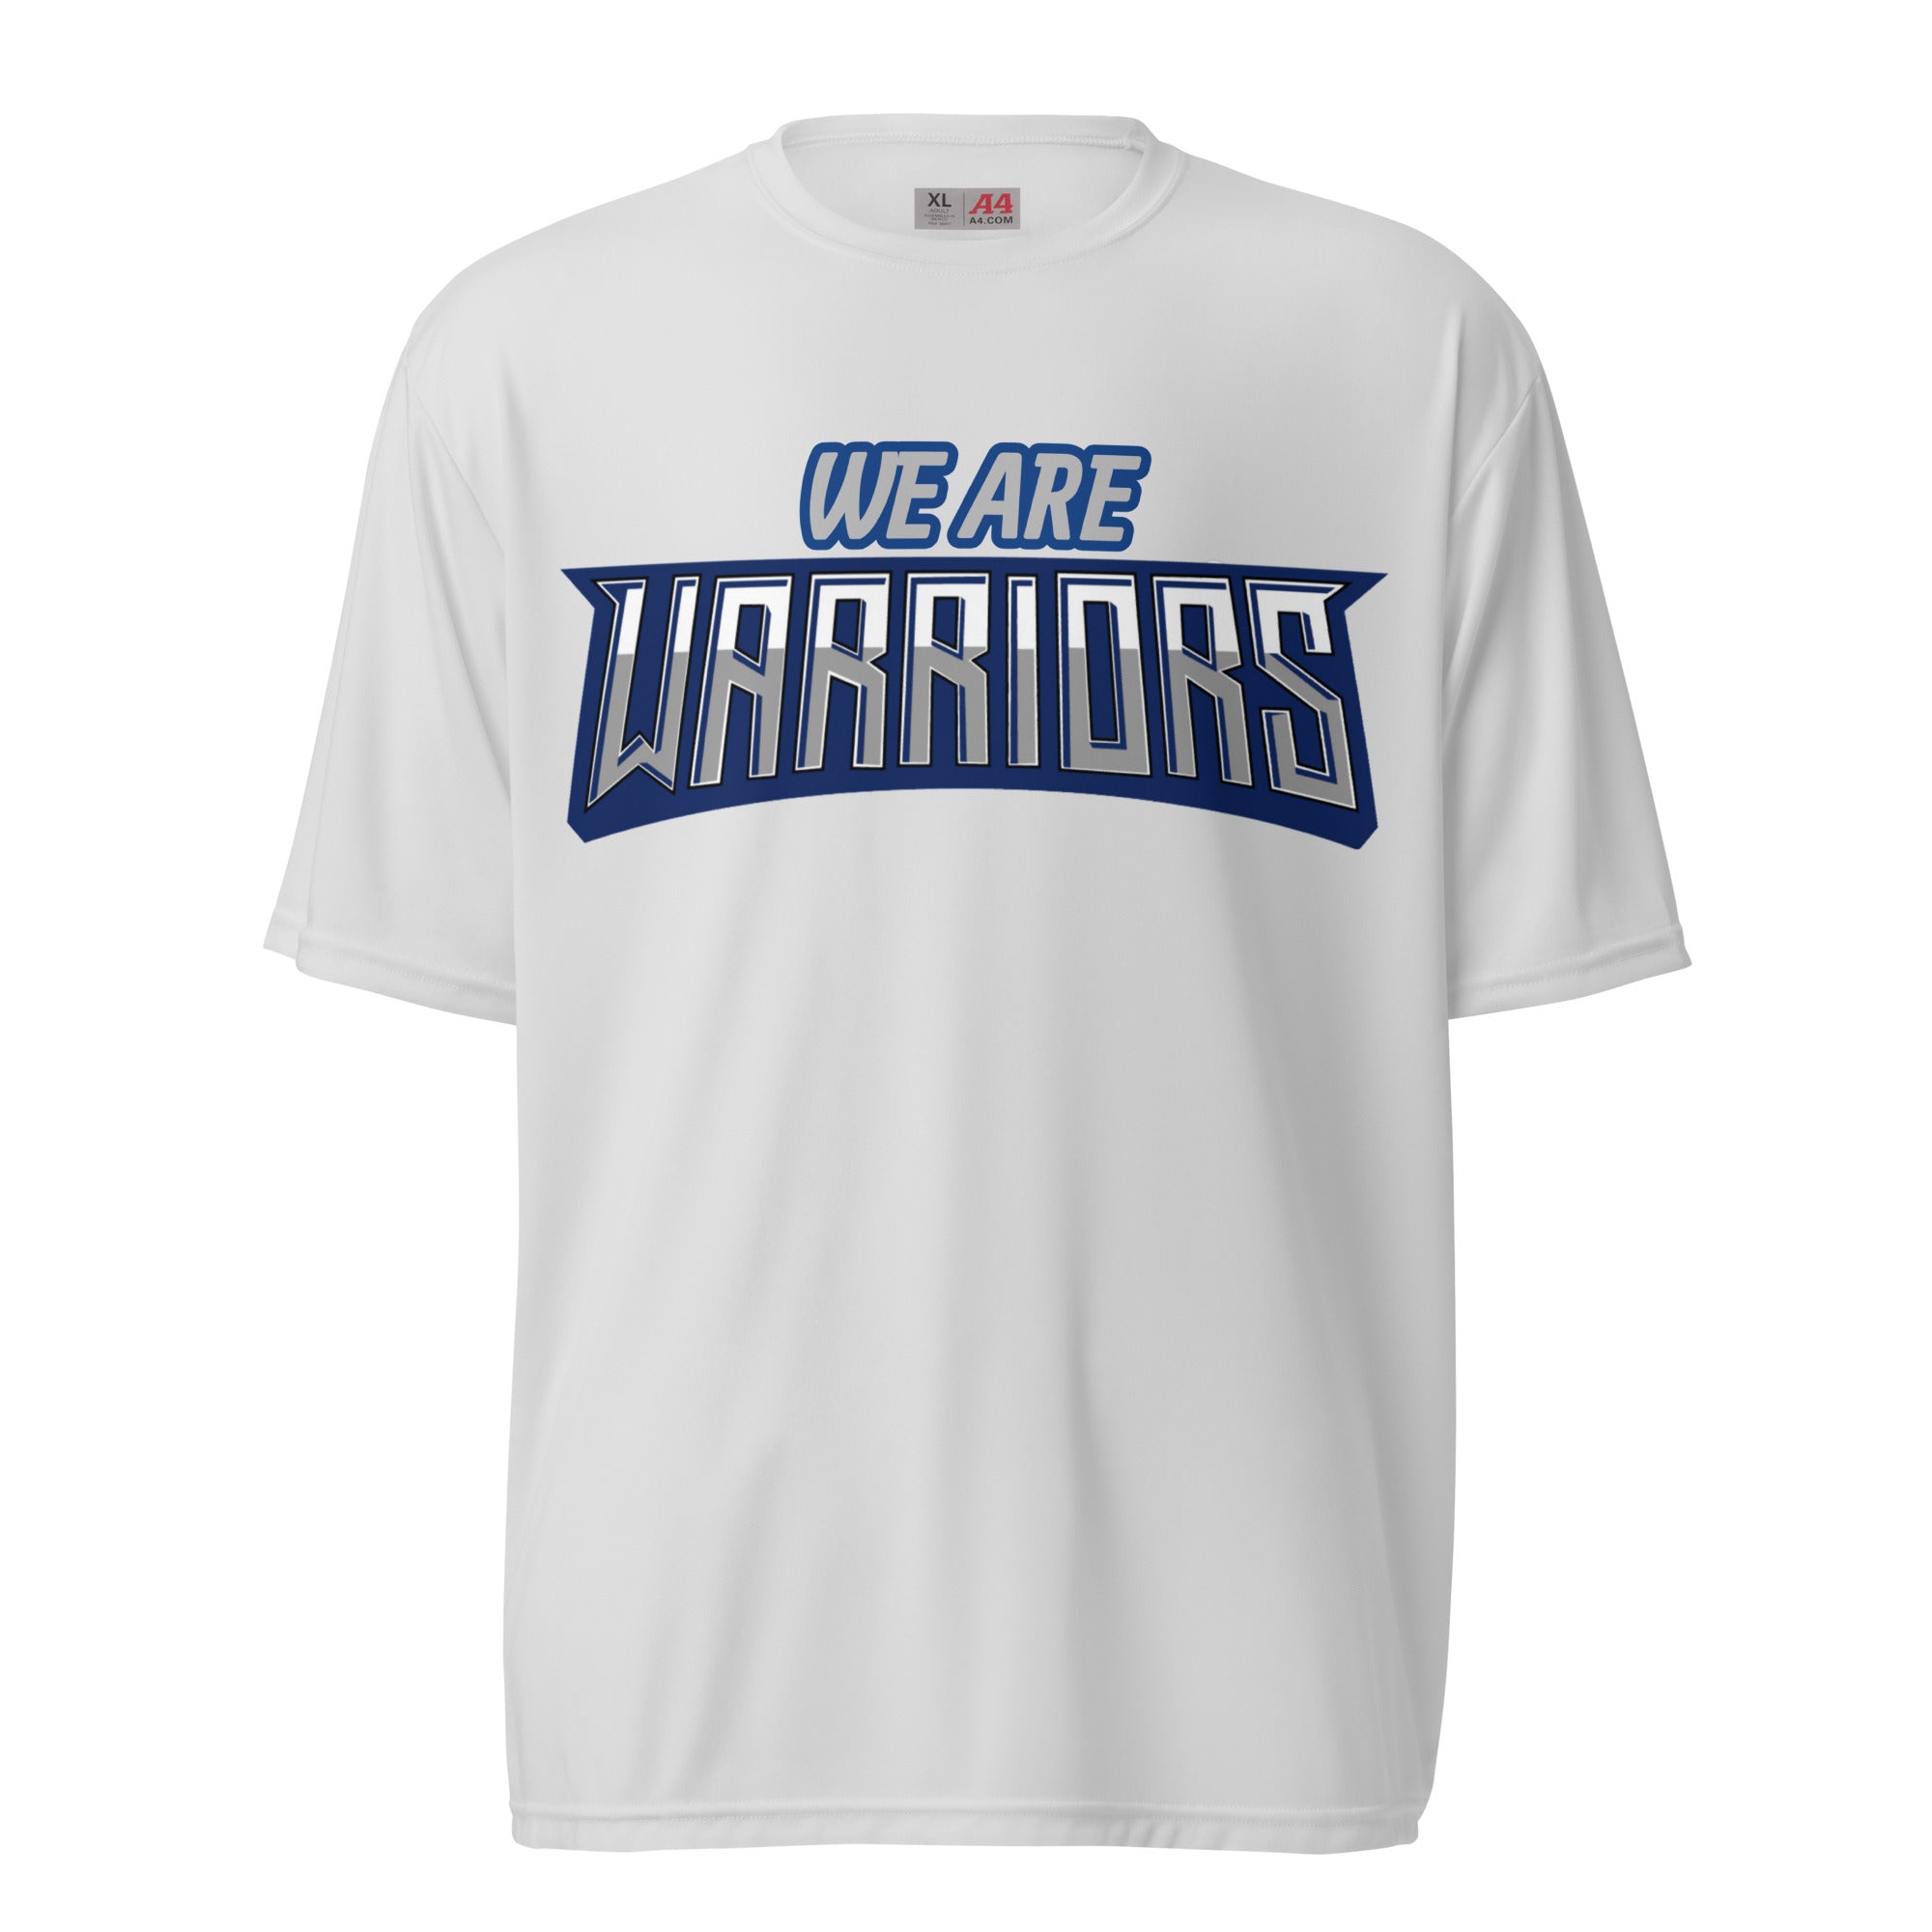 Tampa Warriors We Are Warriors performance crew neck t-shirt